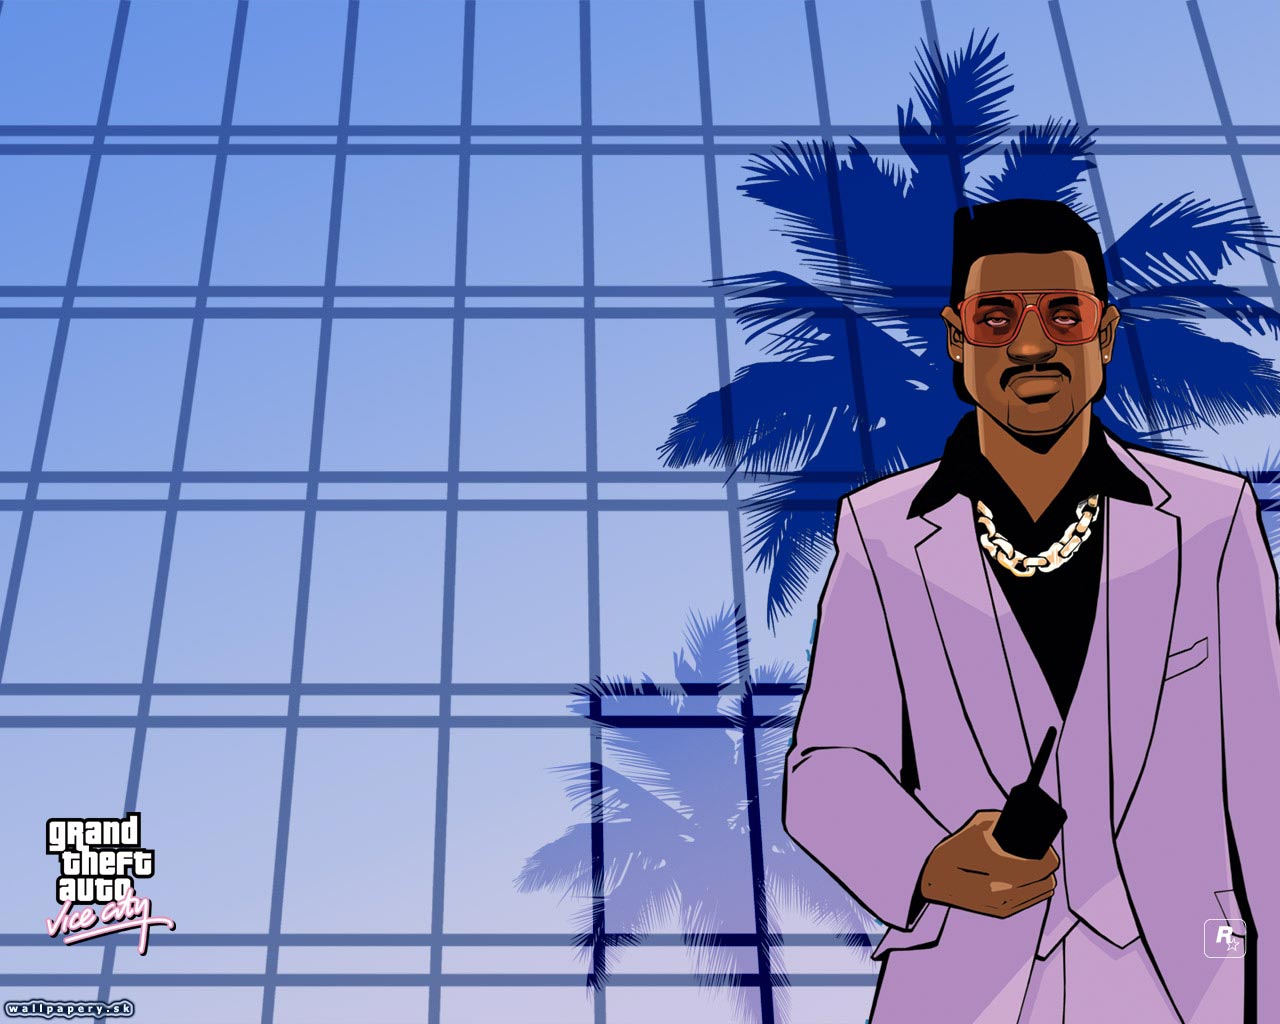 Grand Theft Auto: Vice City - wallpaper 5